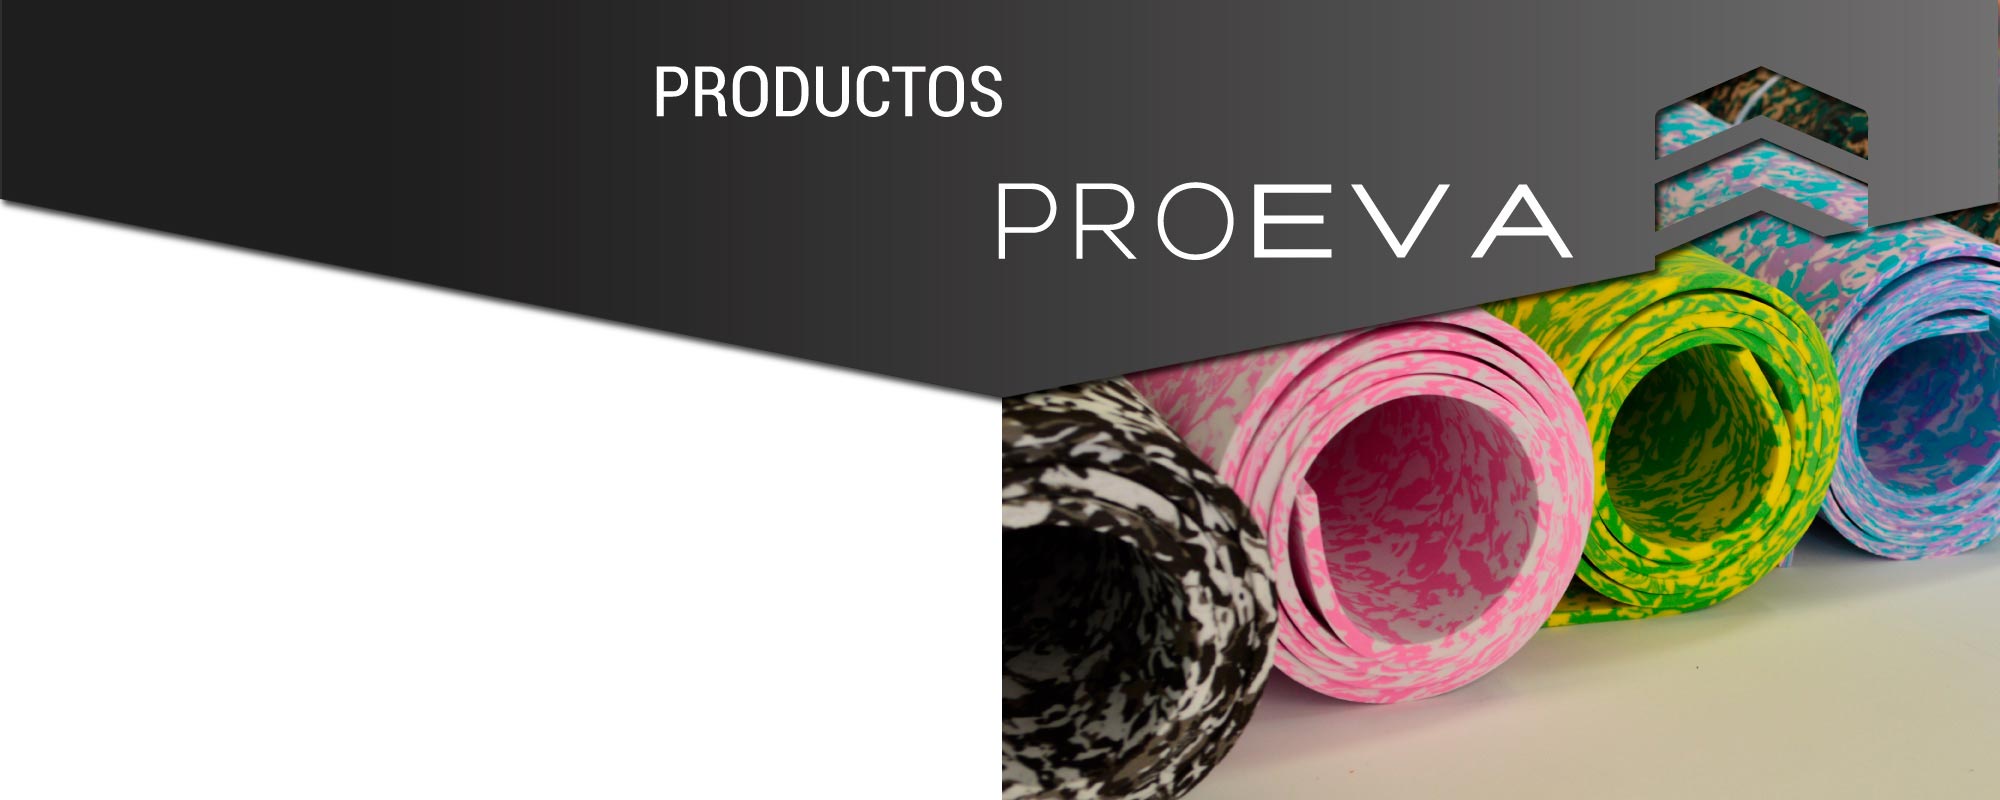 slide-02 Productos ProEva